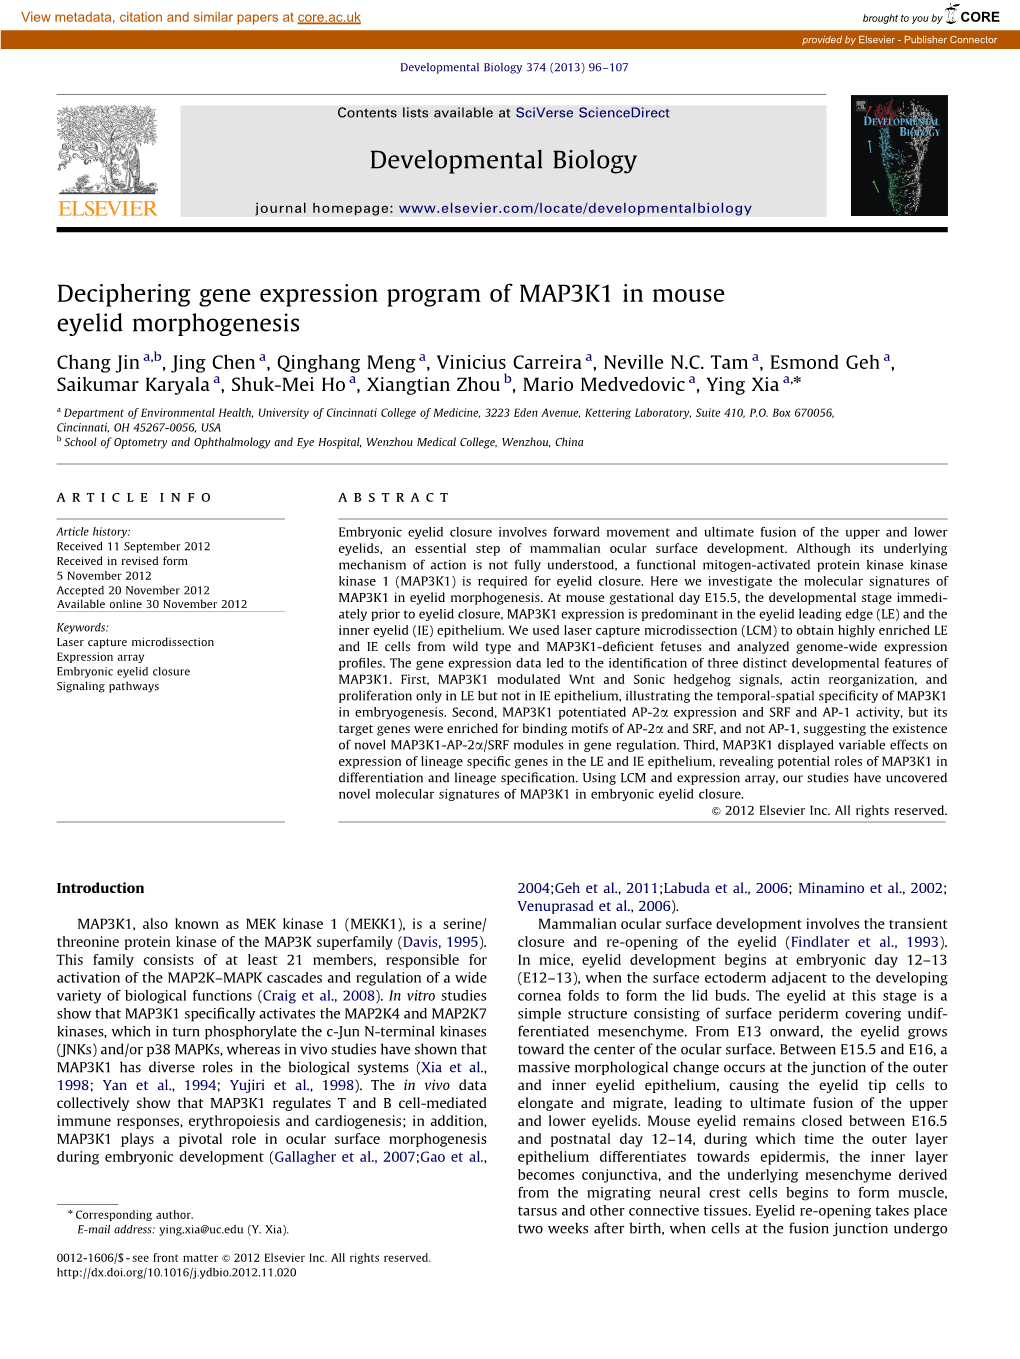 Deciphering Gene Expression Program of MAP3K1 in Mouse Eyelid Morphogenesis